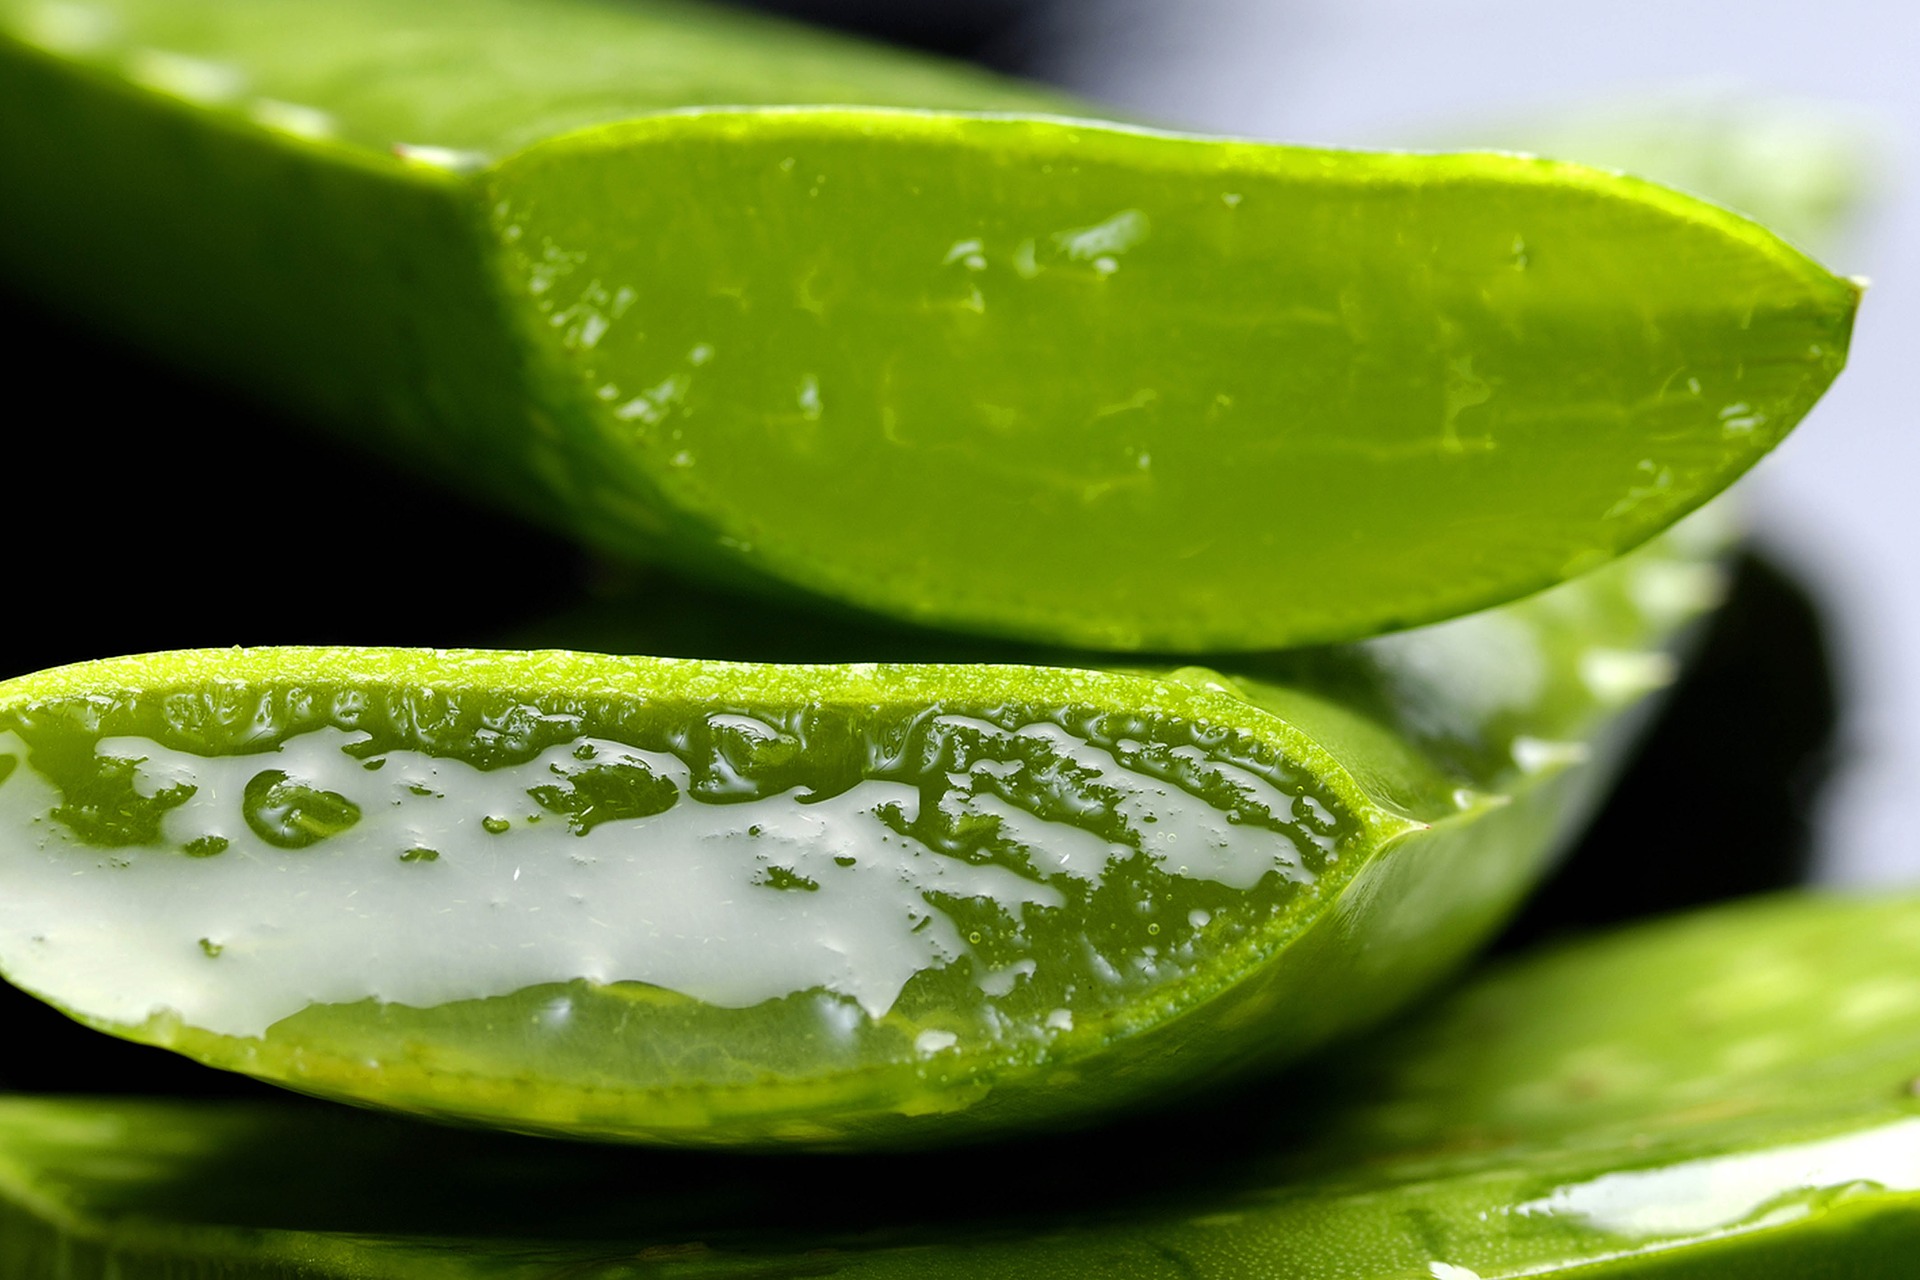 Aloe vera gel can help reduce dandruff symptoms